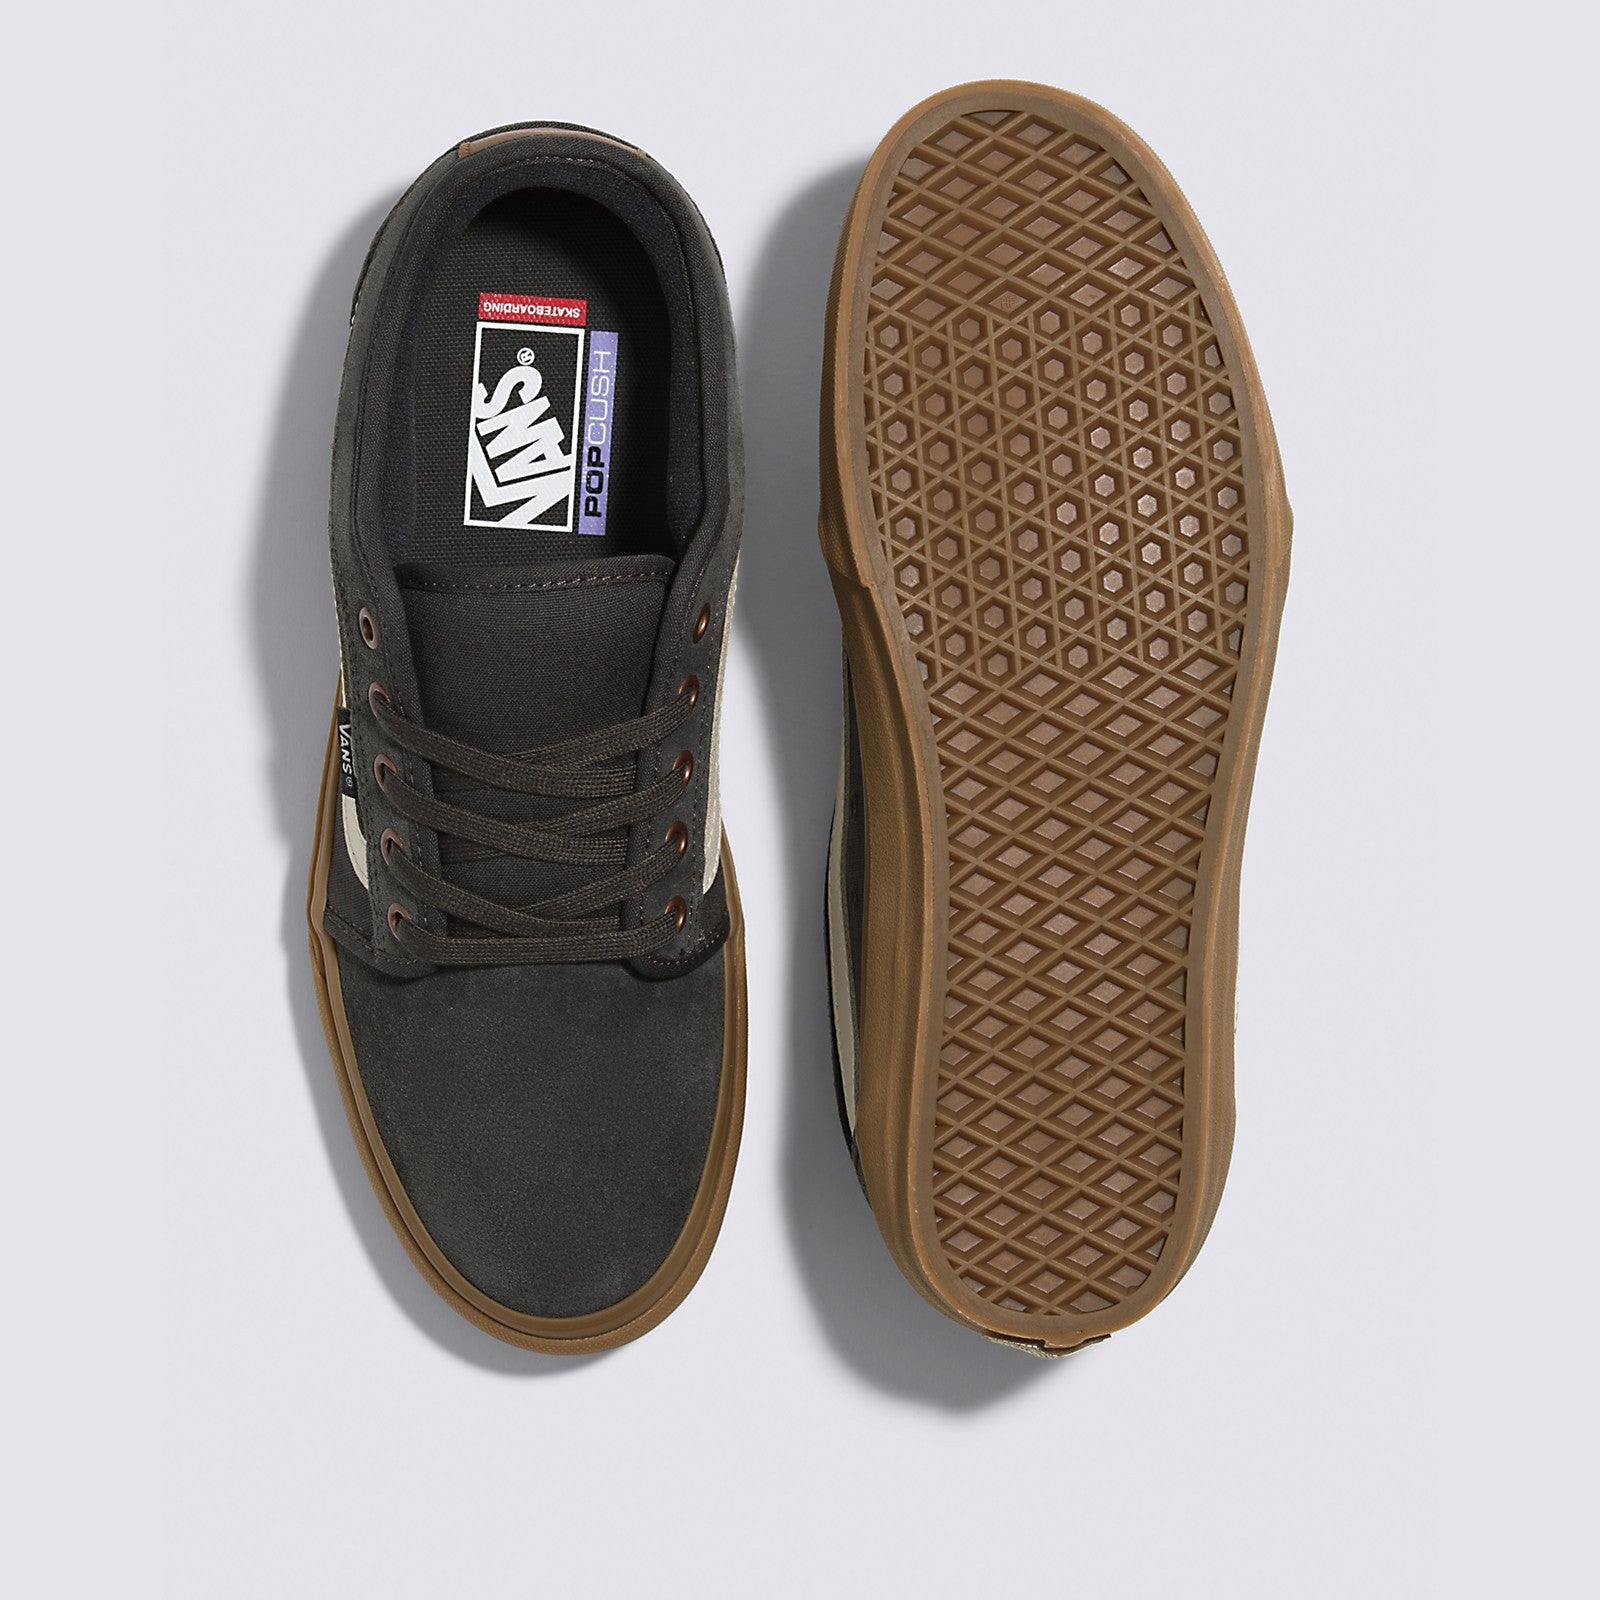 Dark Grey/Gum Chukka Low Sidestripe Vans Skate Shoe Top and Bottom